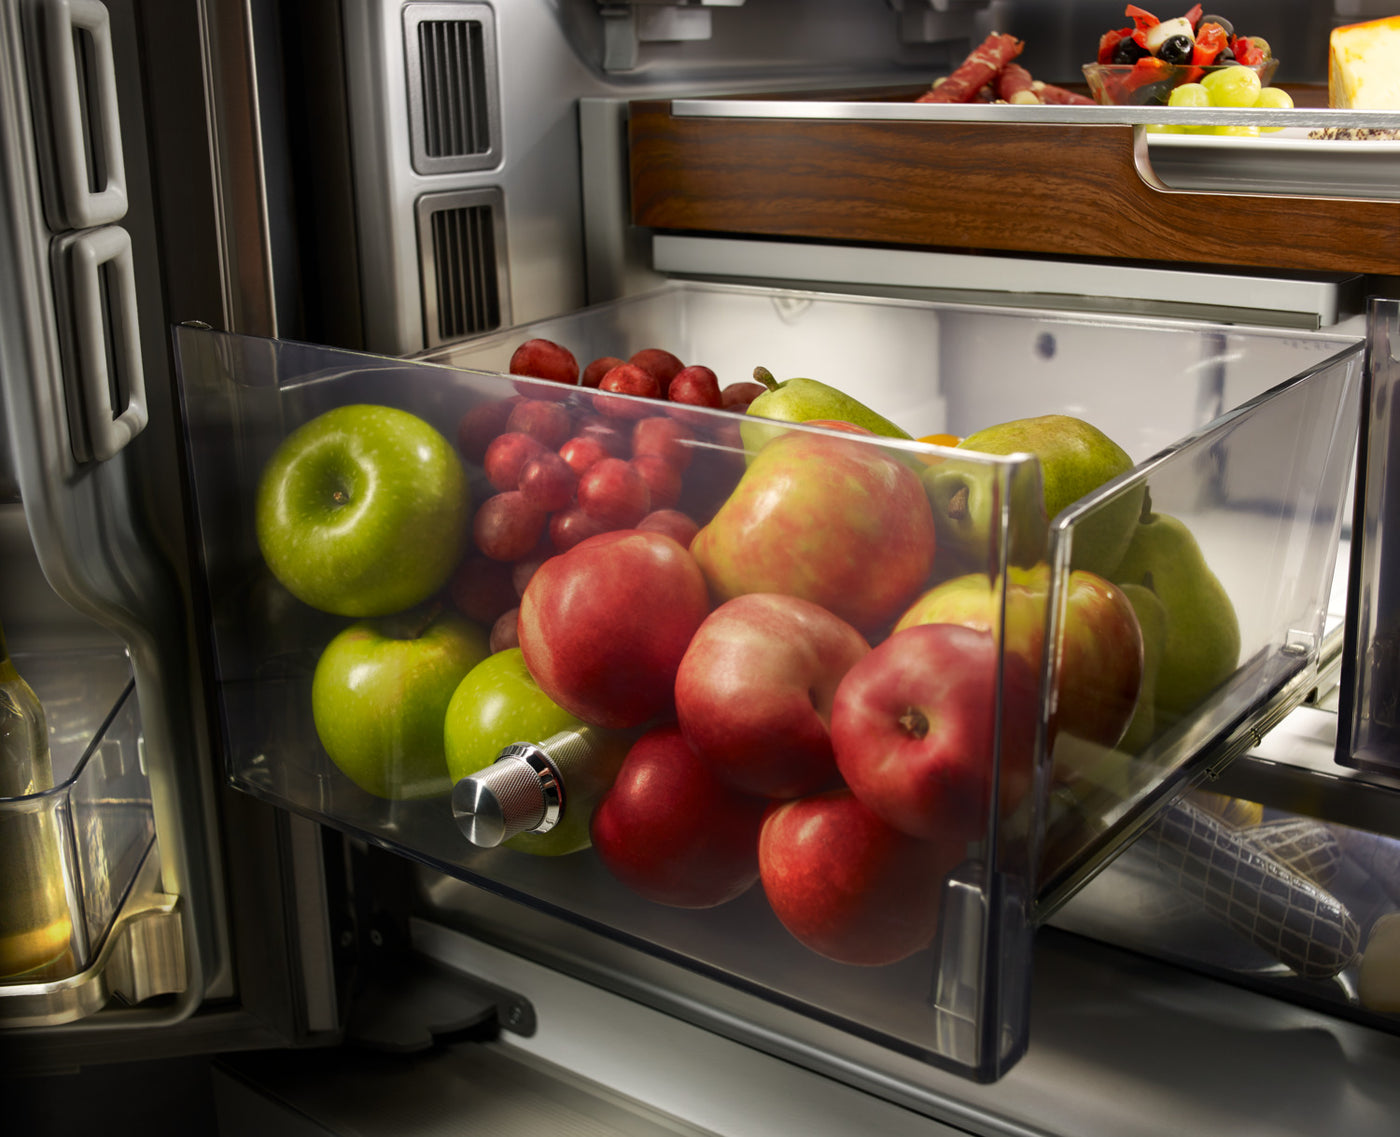 KitchenAid Stainless Steel Counter-Depth French Door Refrigerator (23.8 Cu. Ft.) - KRFC704FPS